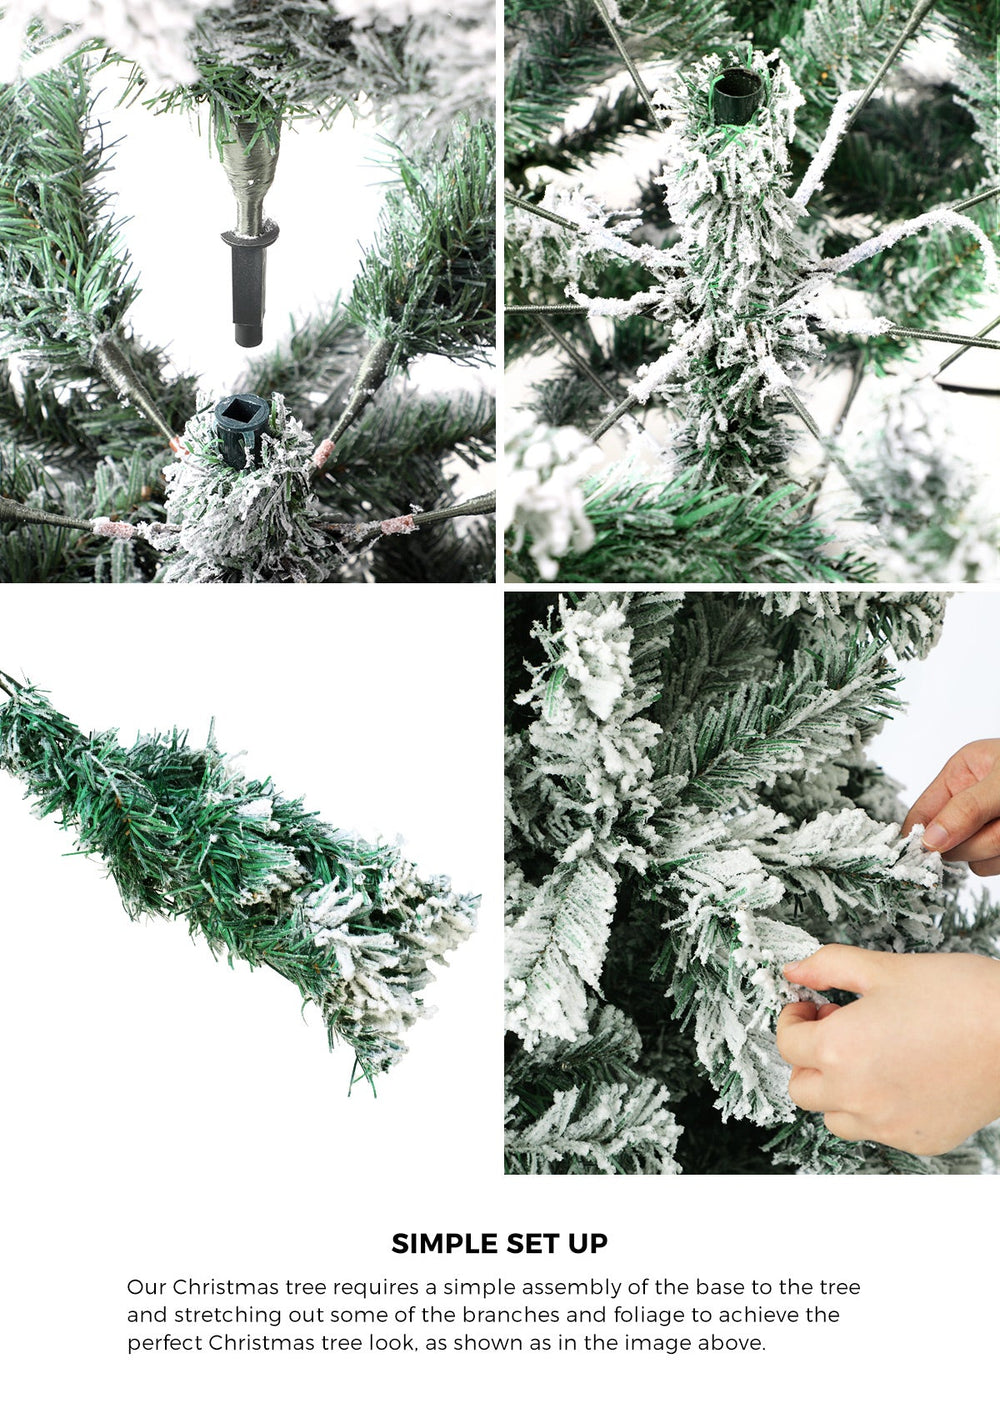 Mazam Christmas Tree 1.8M 6FT Xmas Trees Decorations White Snow Flocked 830 Tips